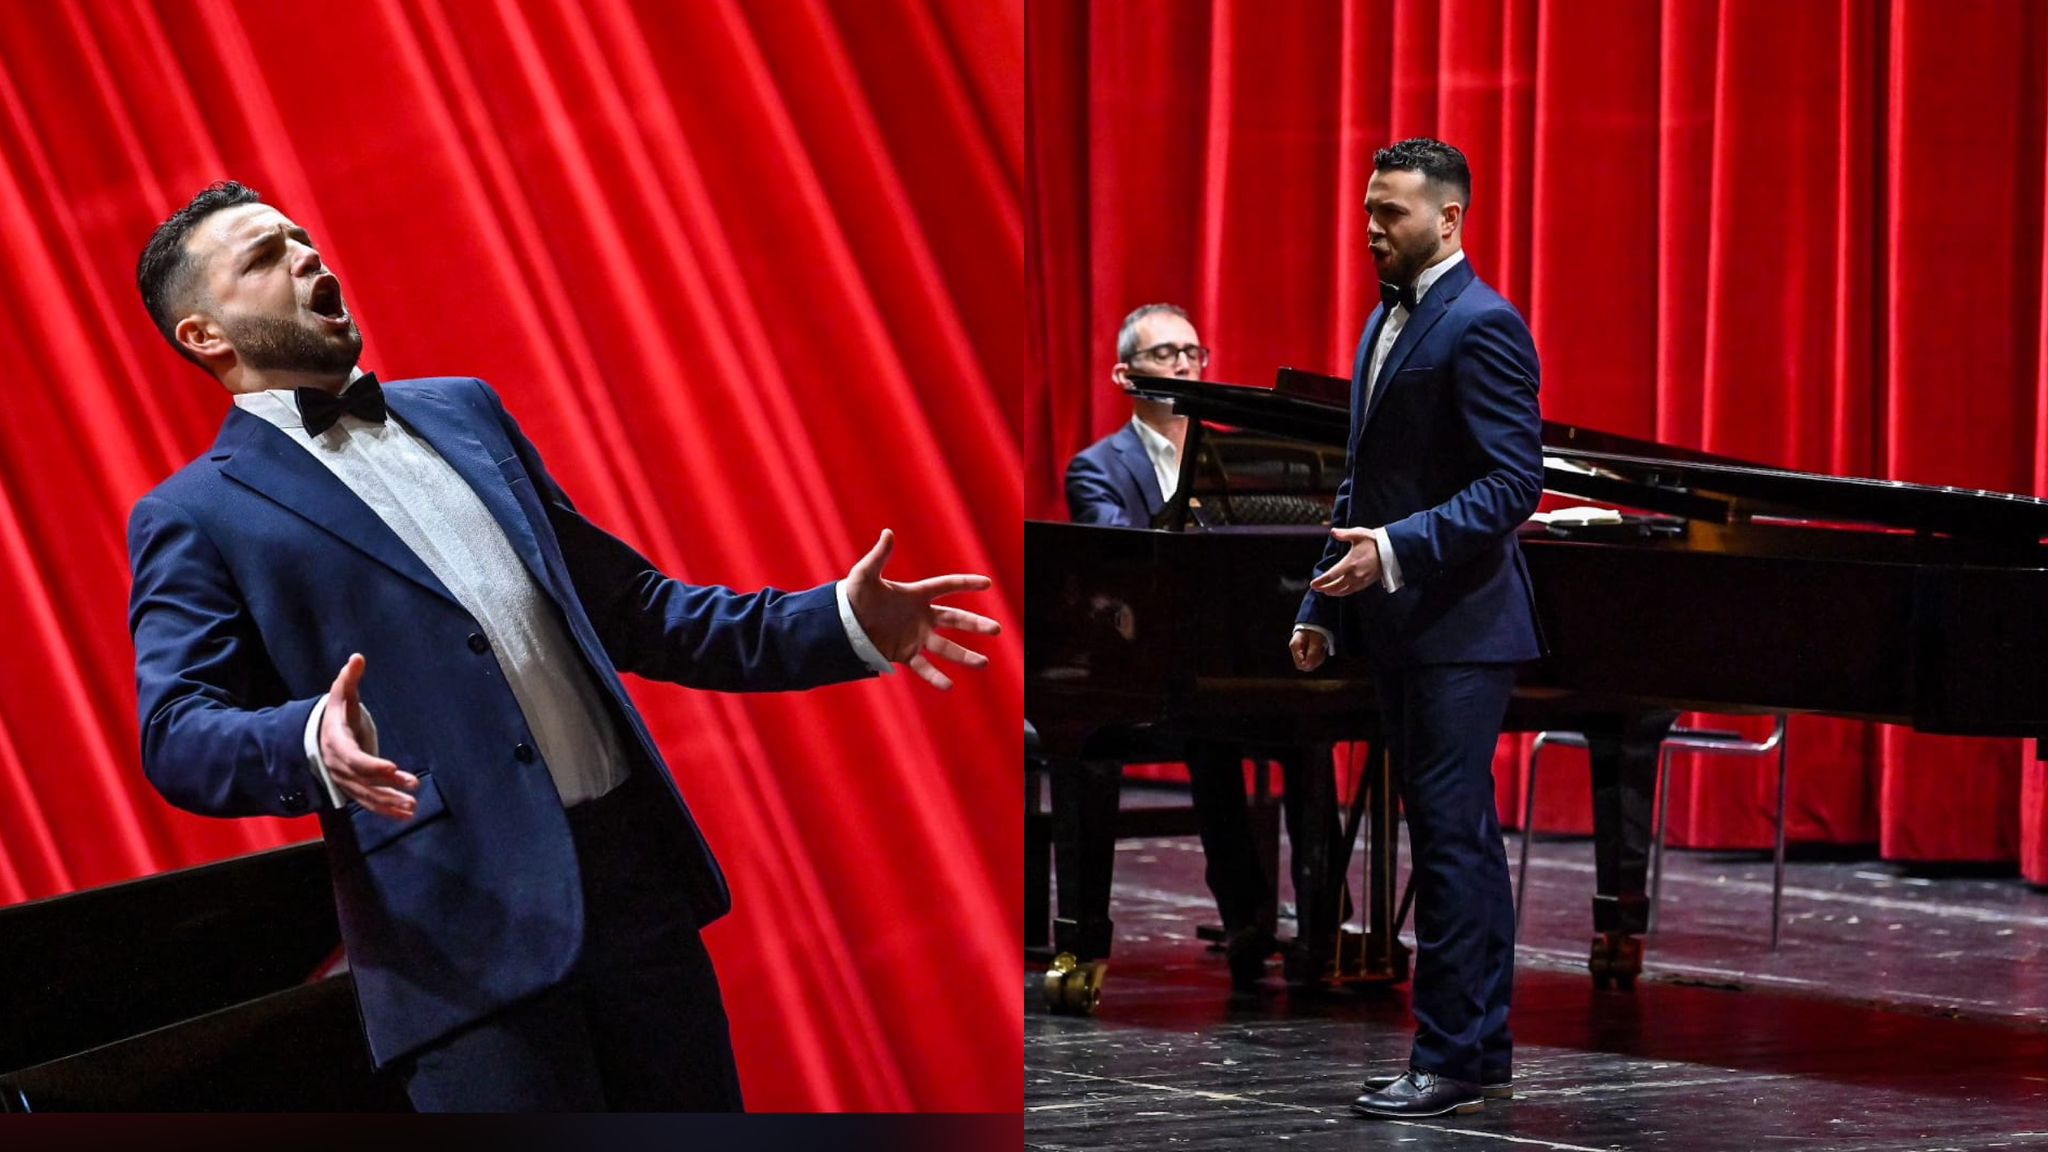 Monti, Gabriele Barria entra nella prestigiosa Accademia Pavarotti-Freni: unico sardo